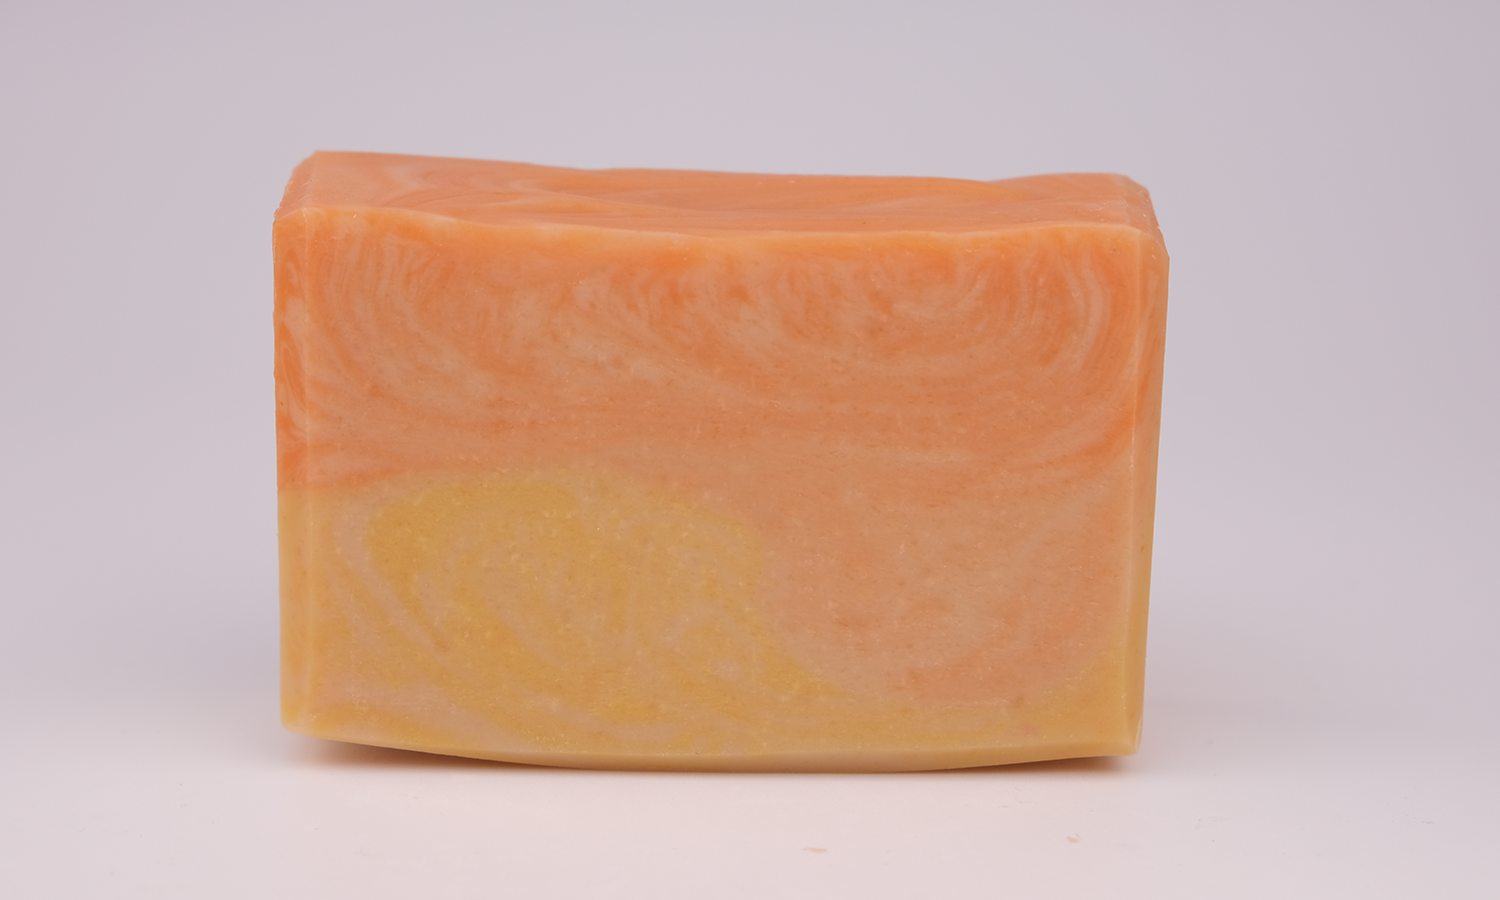 Citrus Sunrise Bar Soap